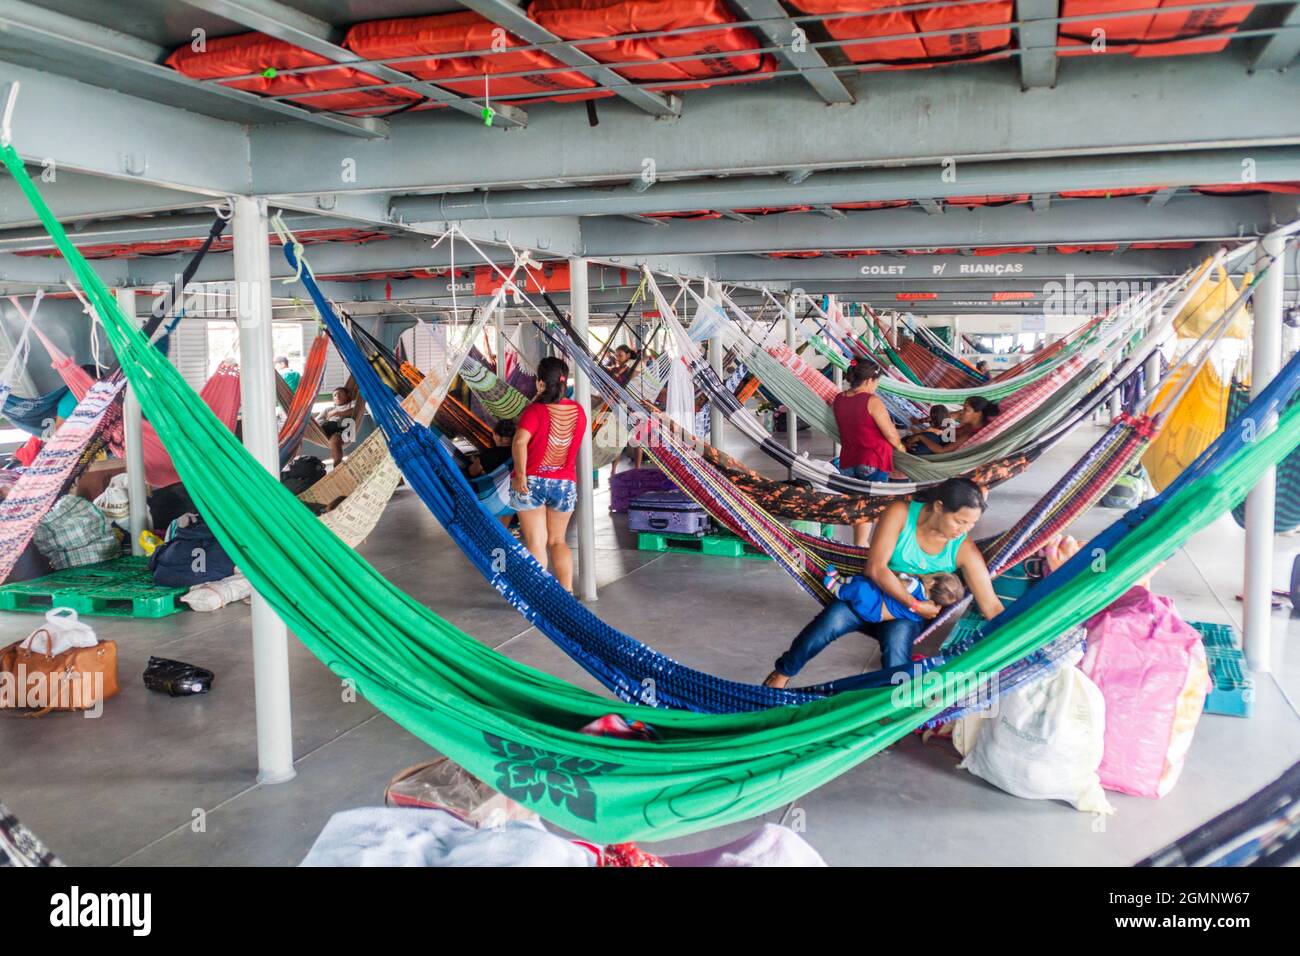 TABATINGA, BRAZIL - JUNE 22, 2015: Passengers of hammock deck at the boat Diamante which plies river Amazon between Tabatinga and Manaus, Brazil. Stock Photo